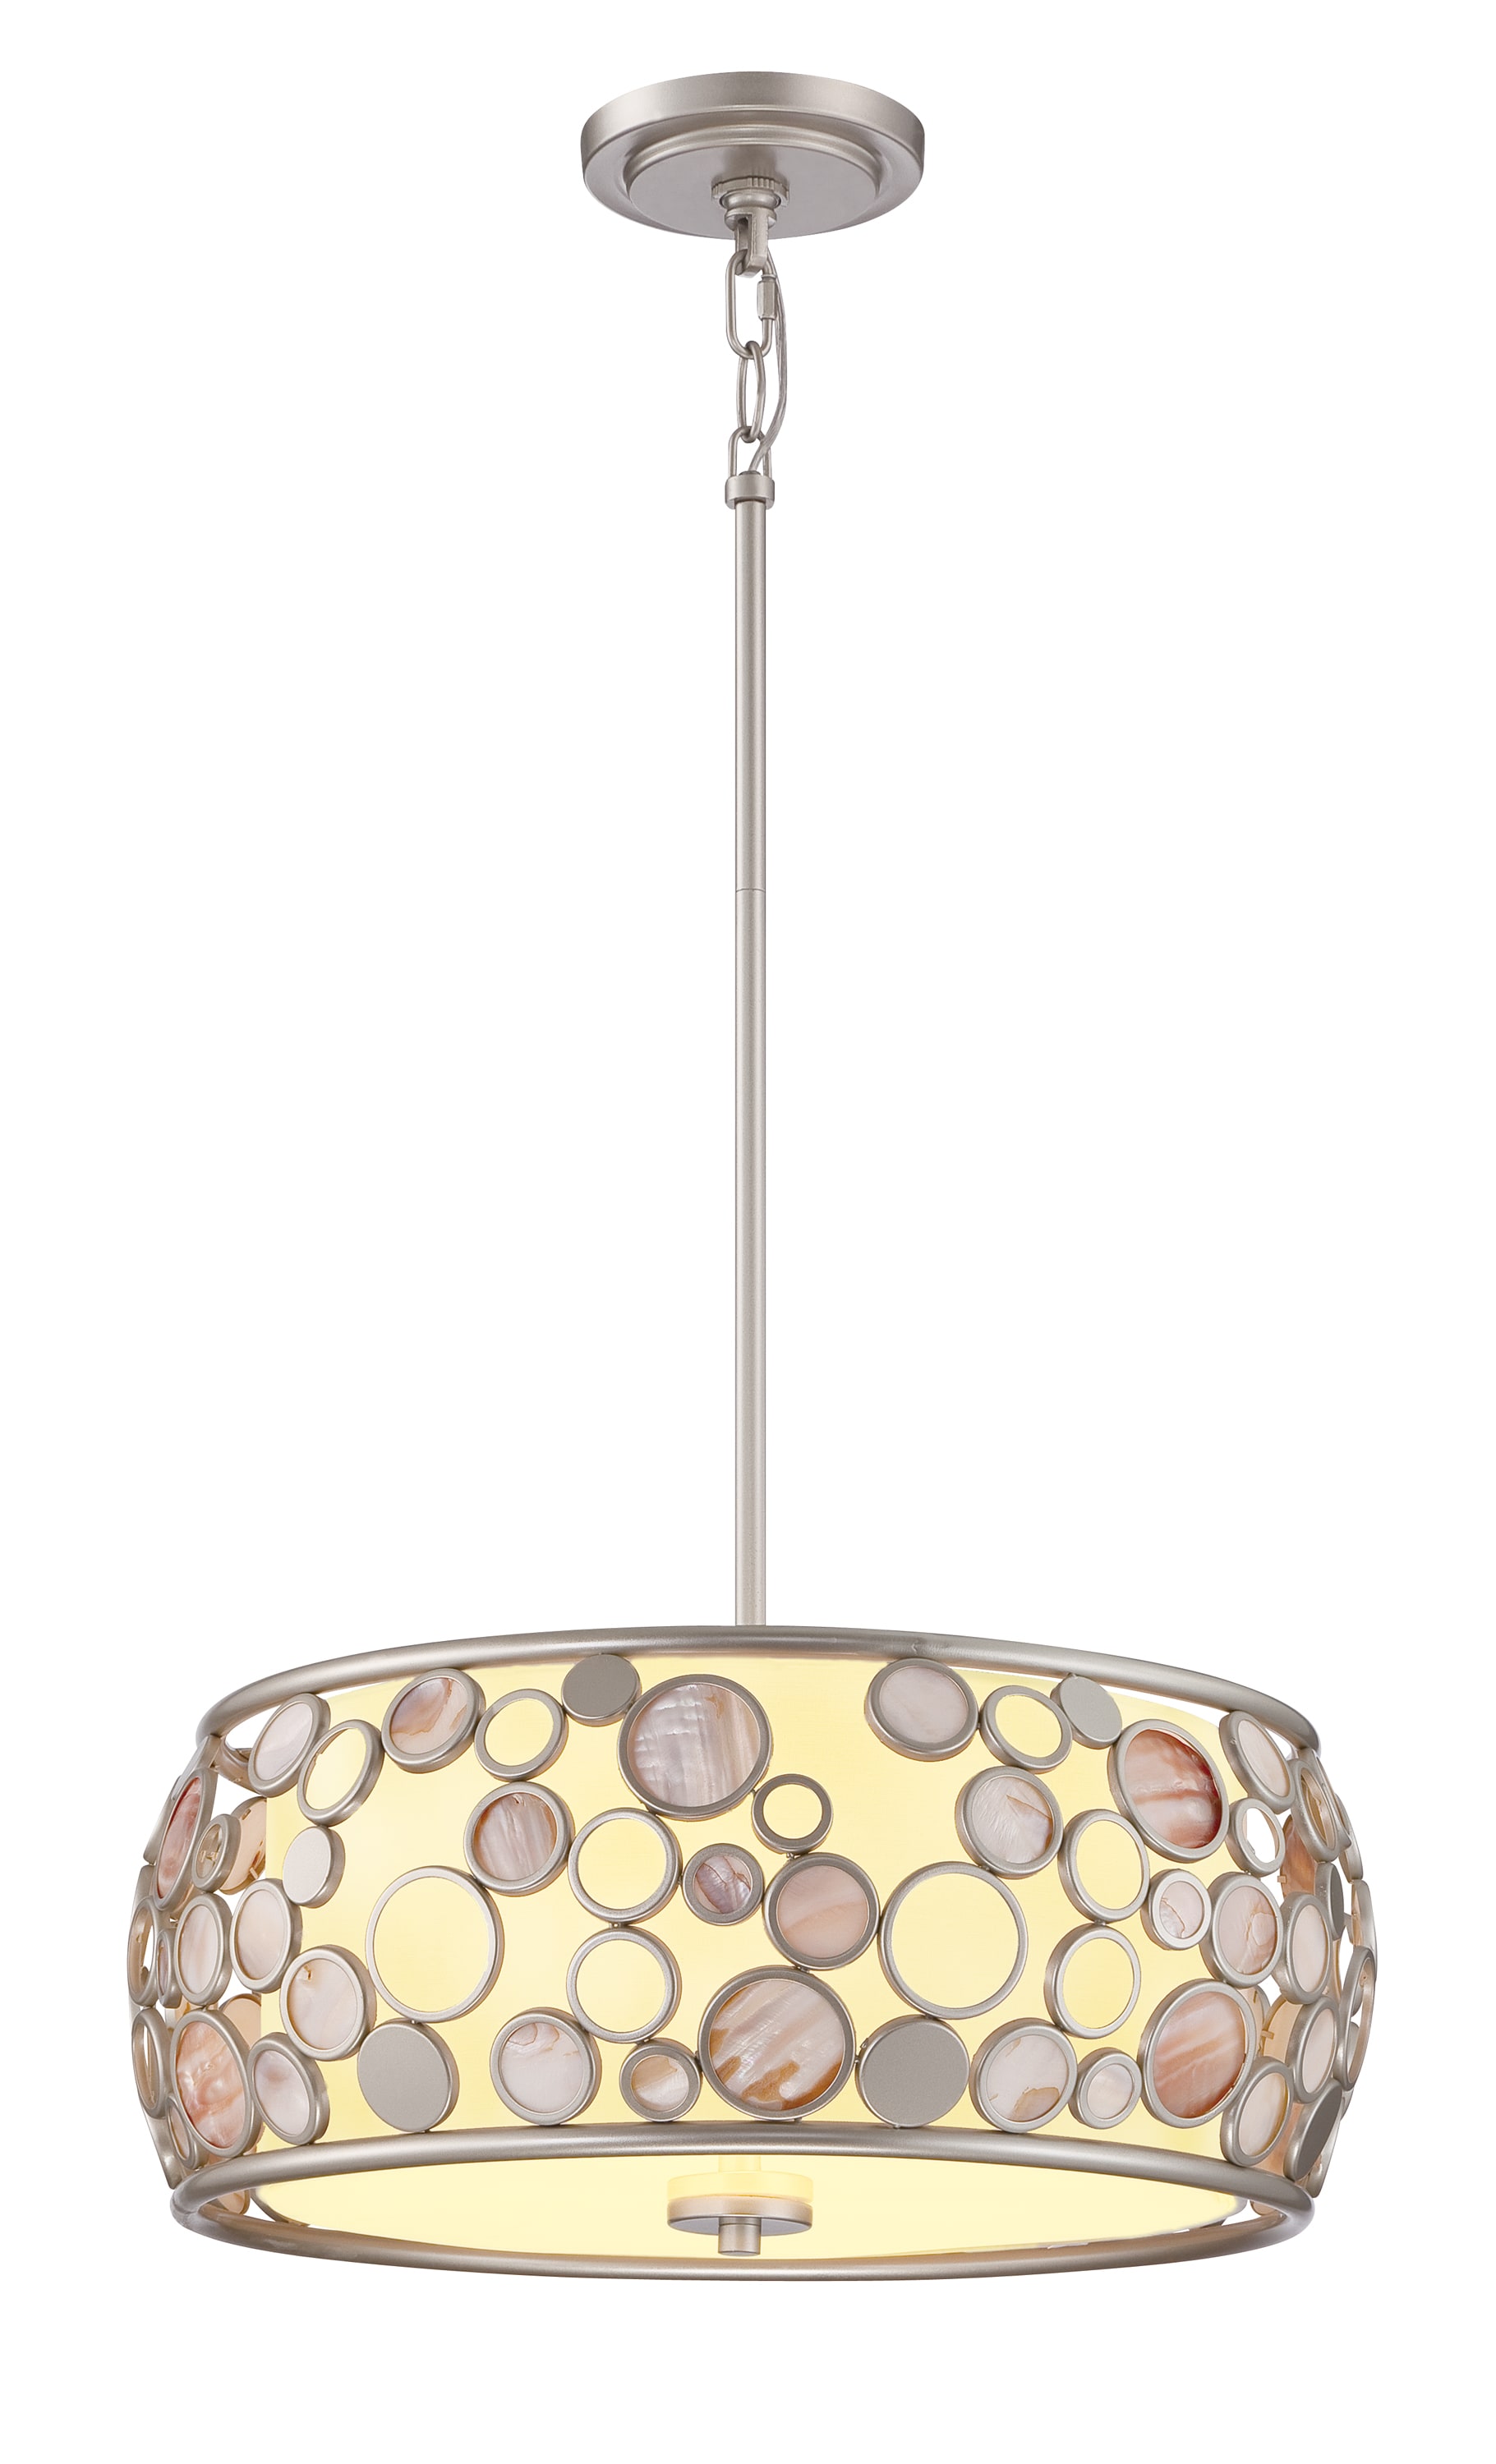 Light Fairgate at Modern/Contemporary Silver Pendant Hanging Outdoor Quoizel Mini 4-Light Drum